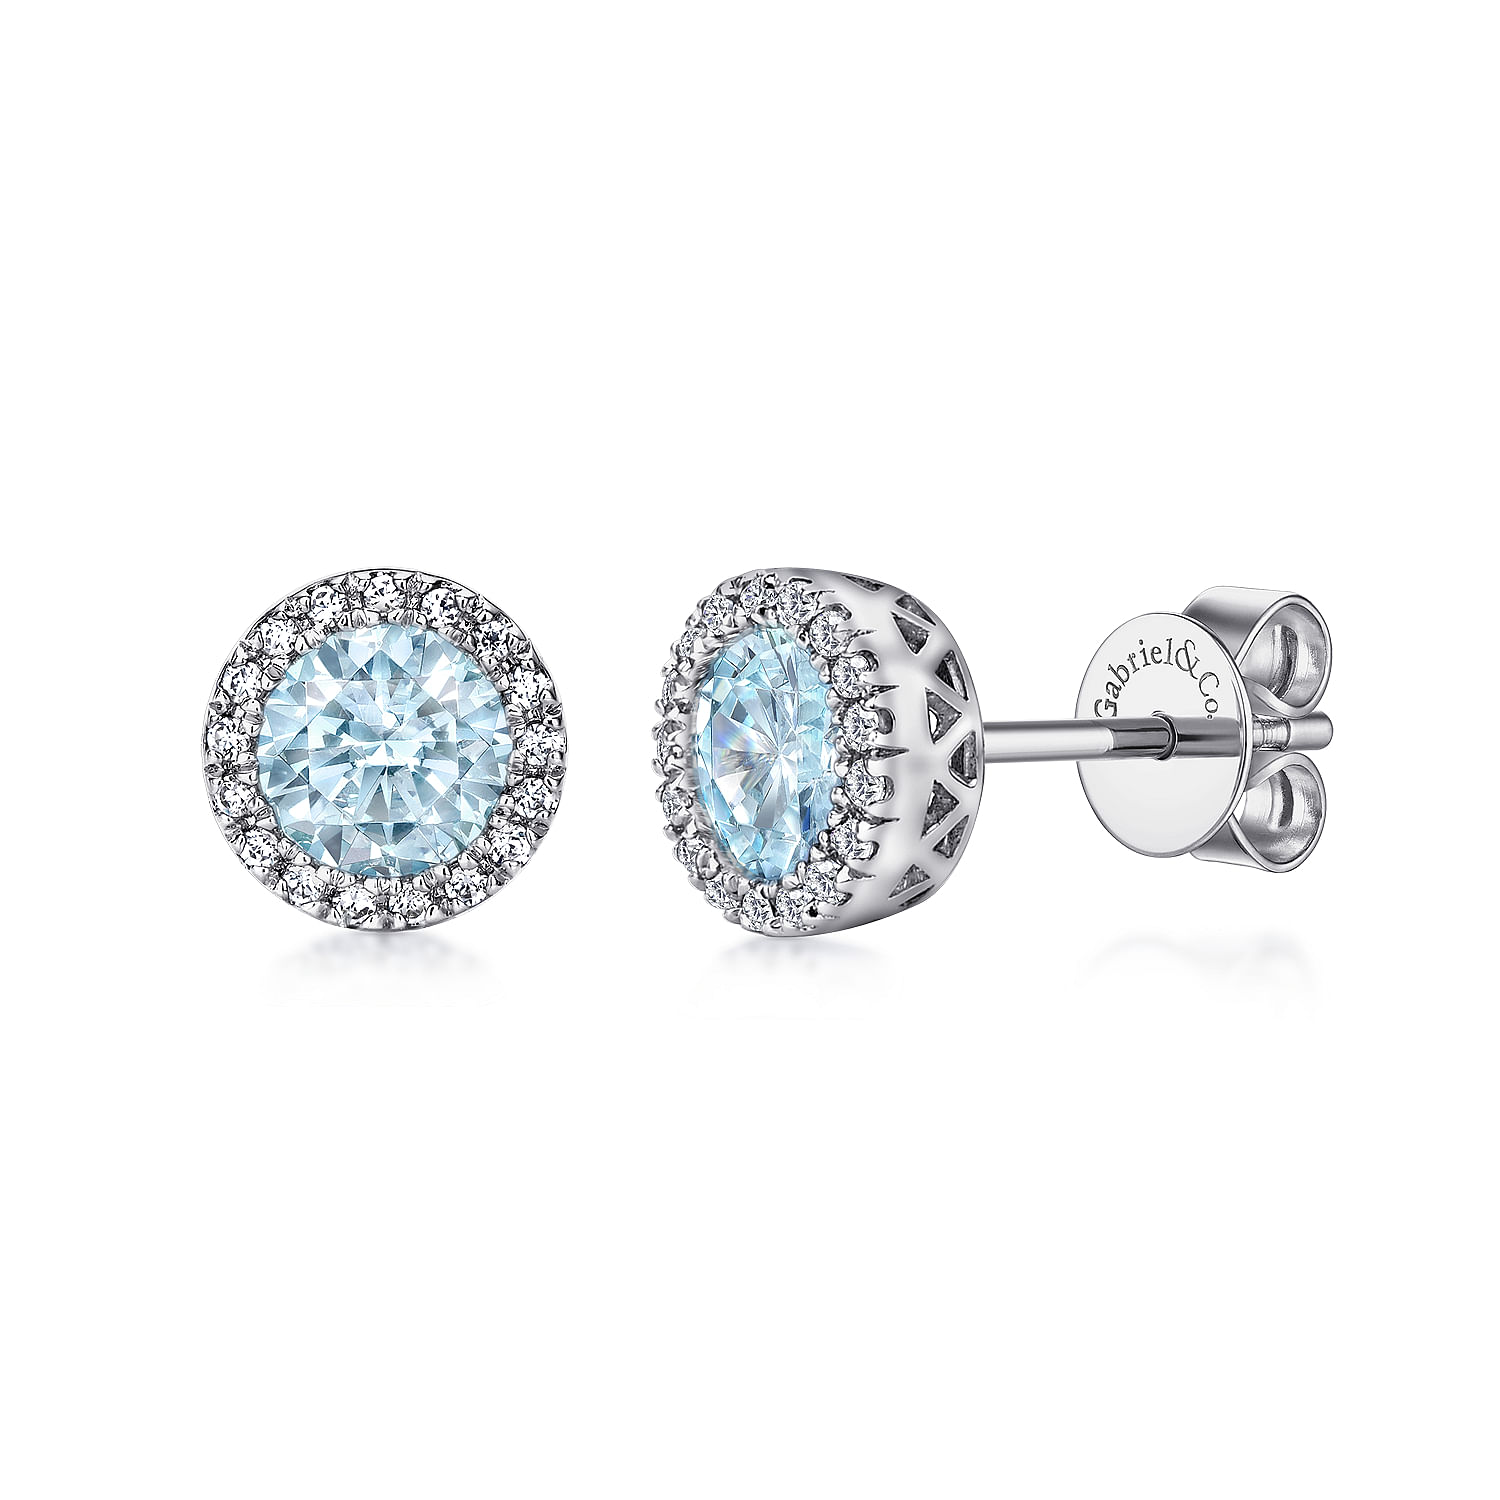 14K White Gold Diamond and Aquamarine Halo Stud Earrings